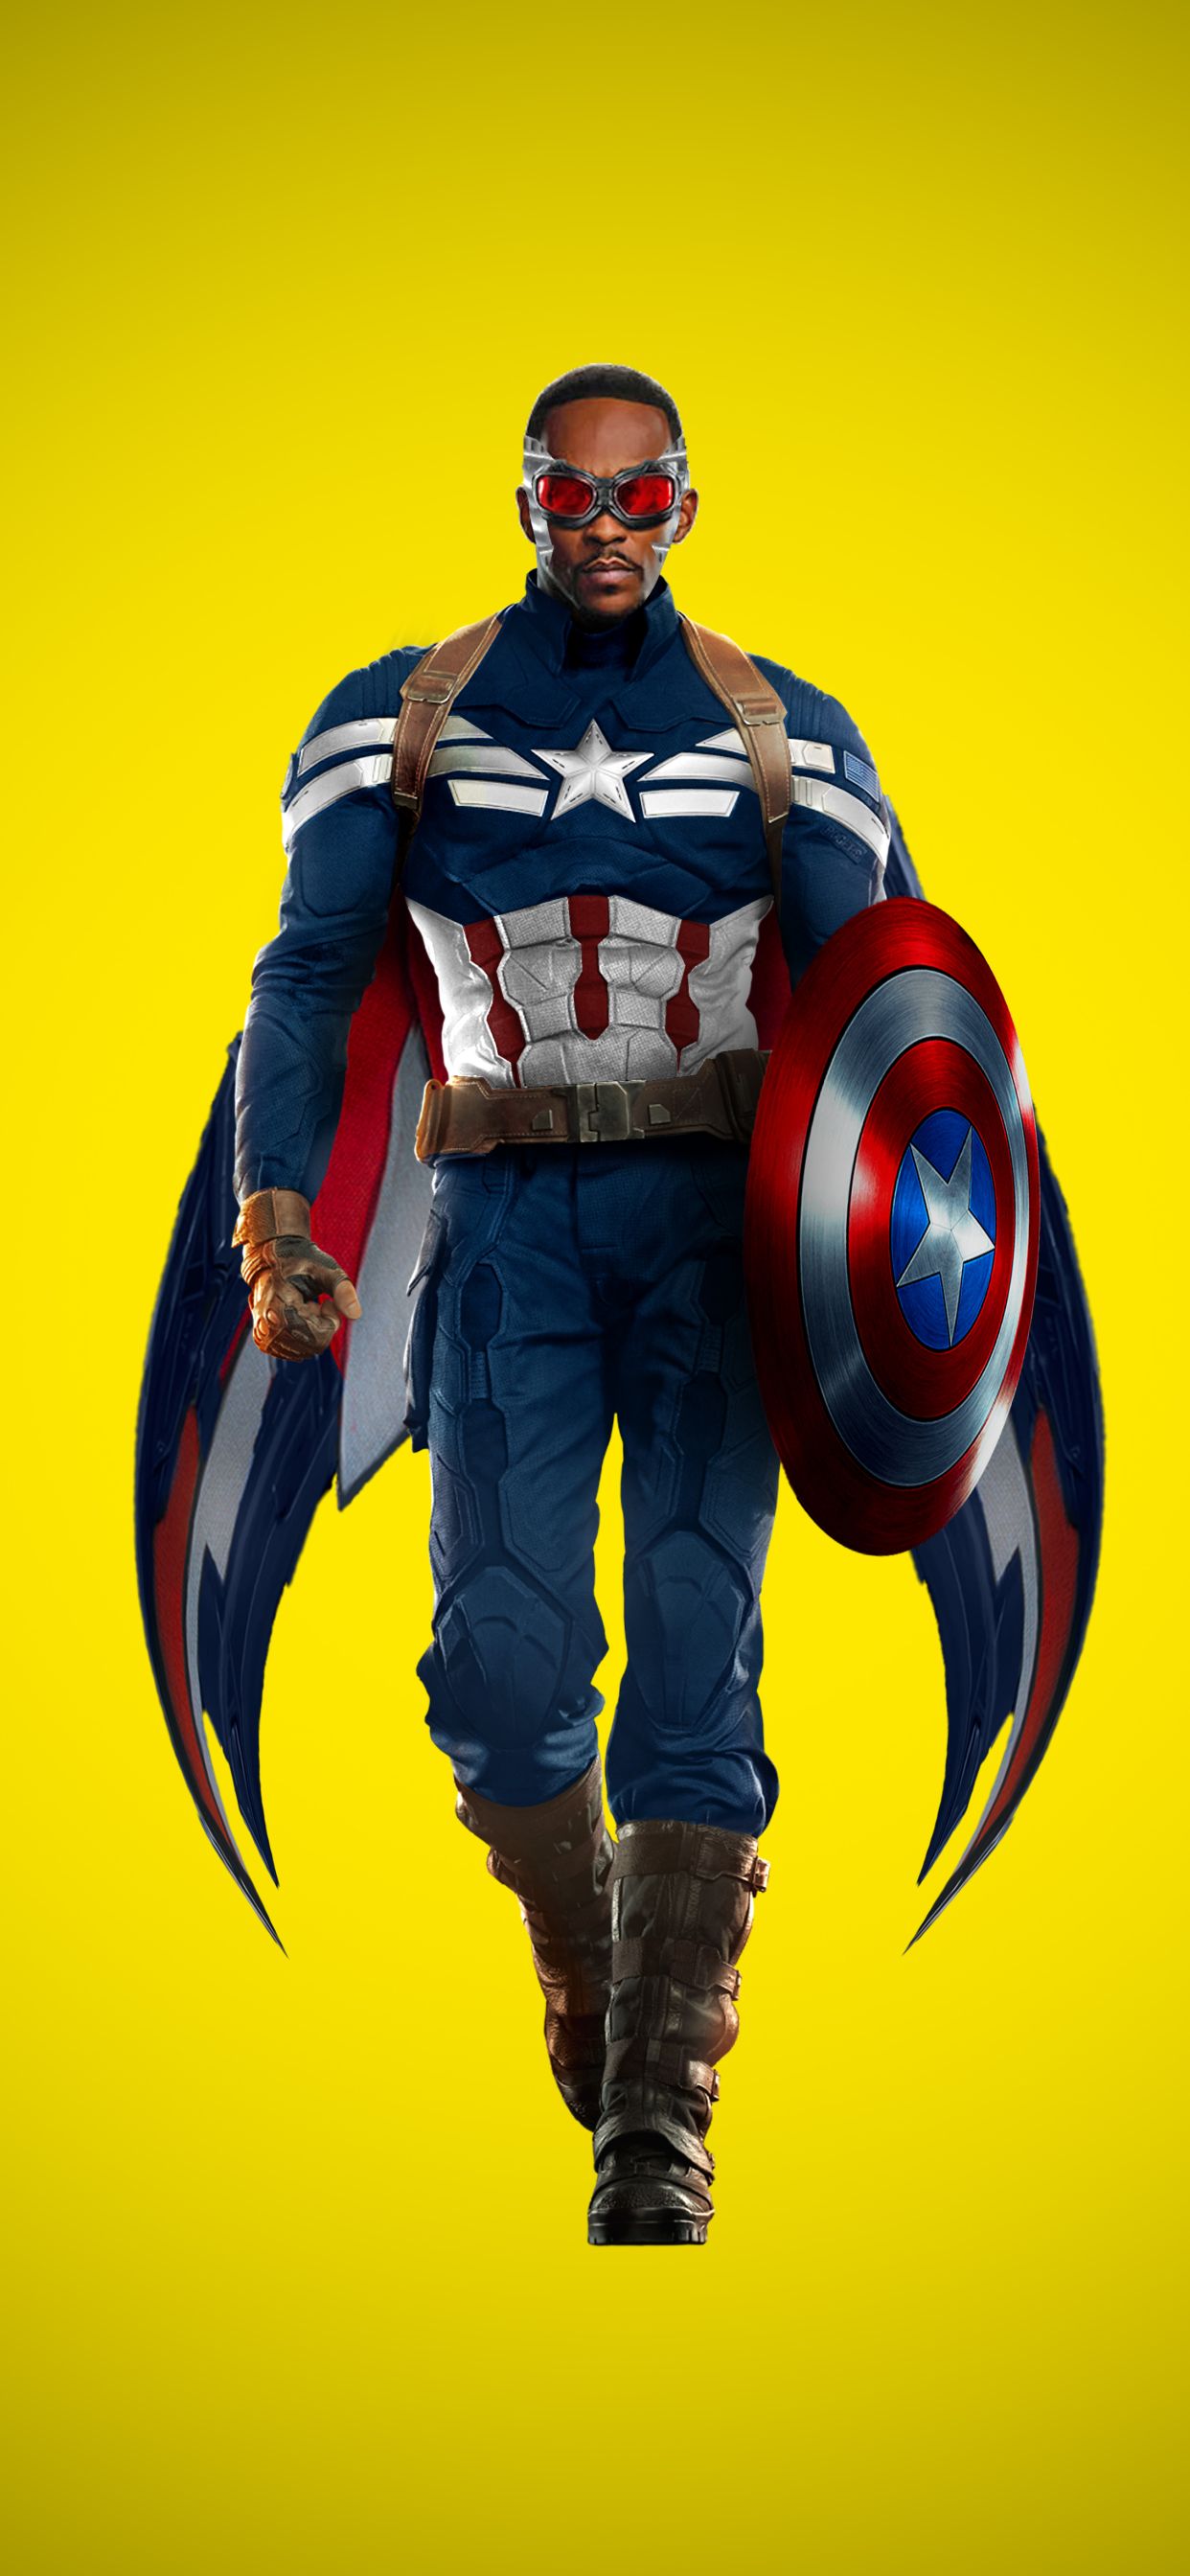 Sam Wilson Captain America Wallpapers